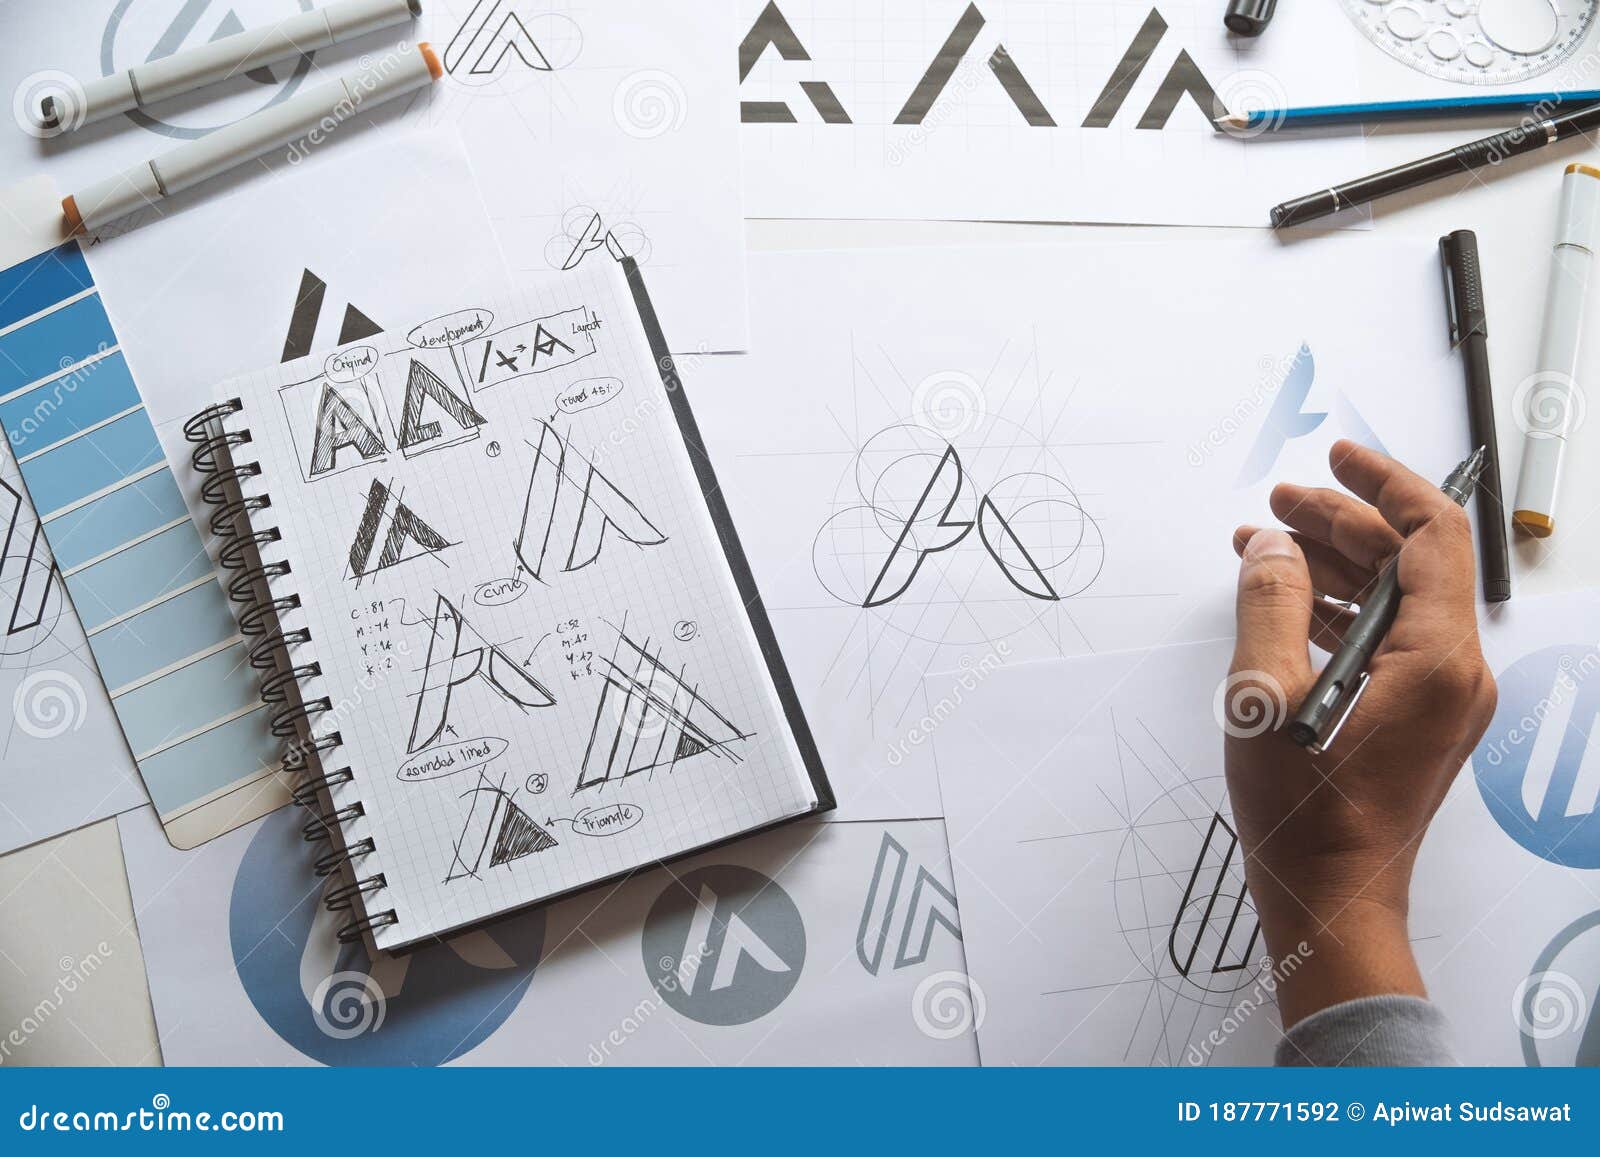 graphic er drawing sketch  creative ideas draft logo product trademark label brand artwork. graphic er studio